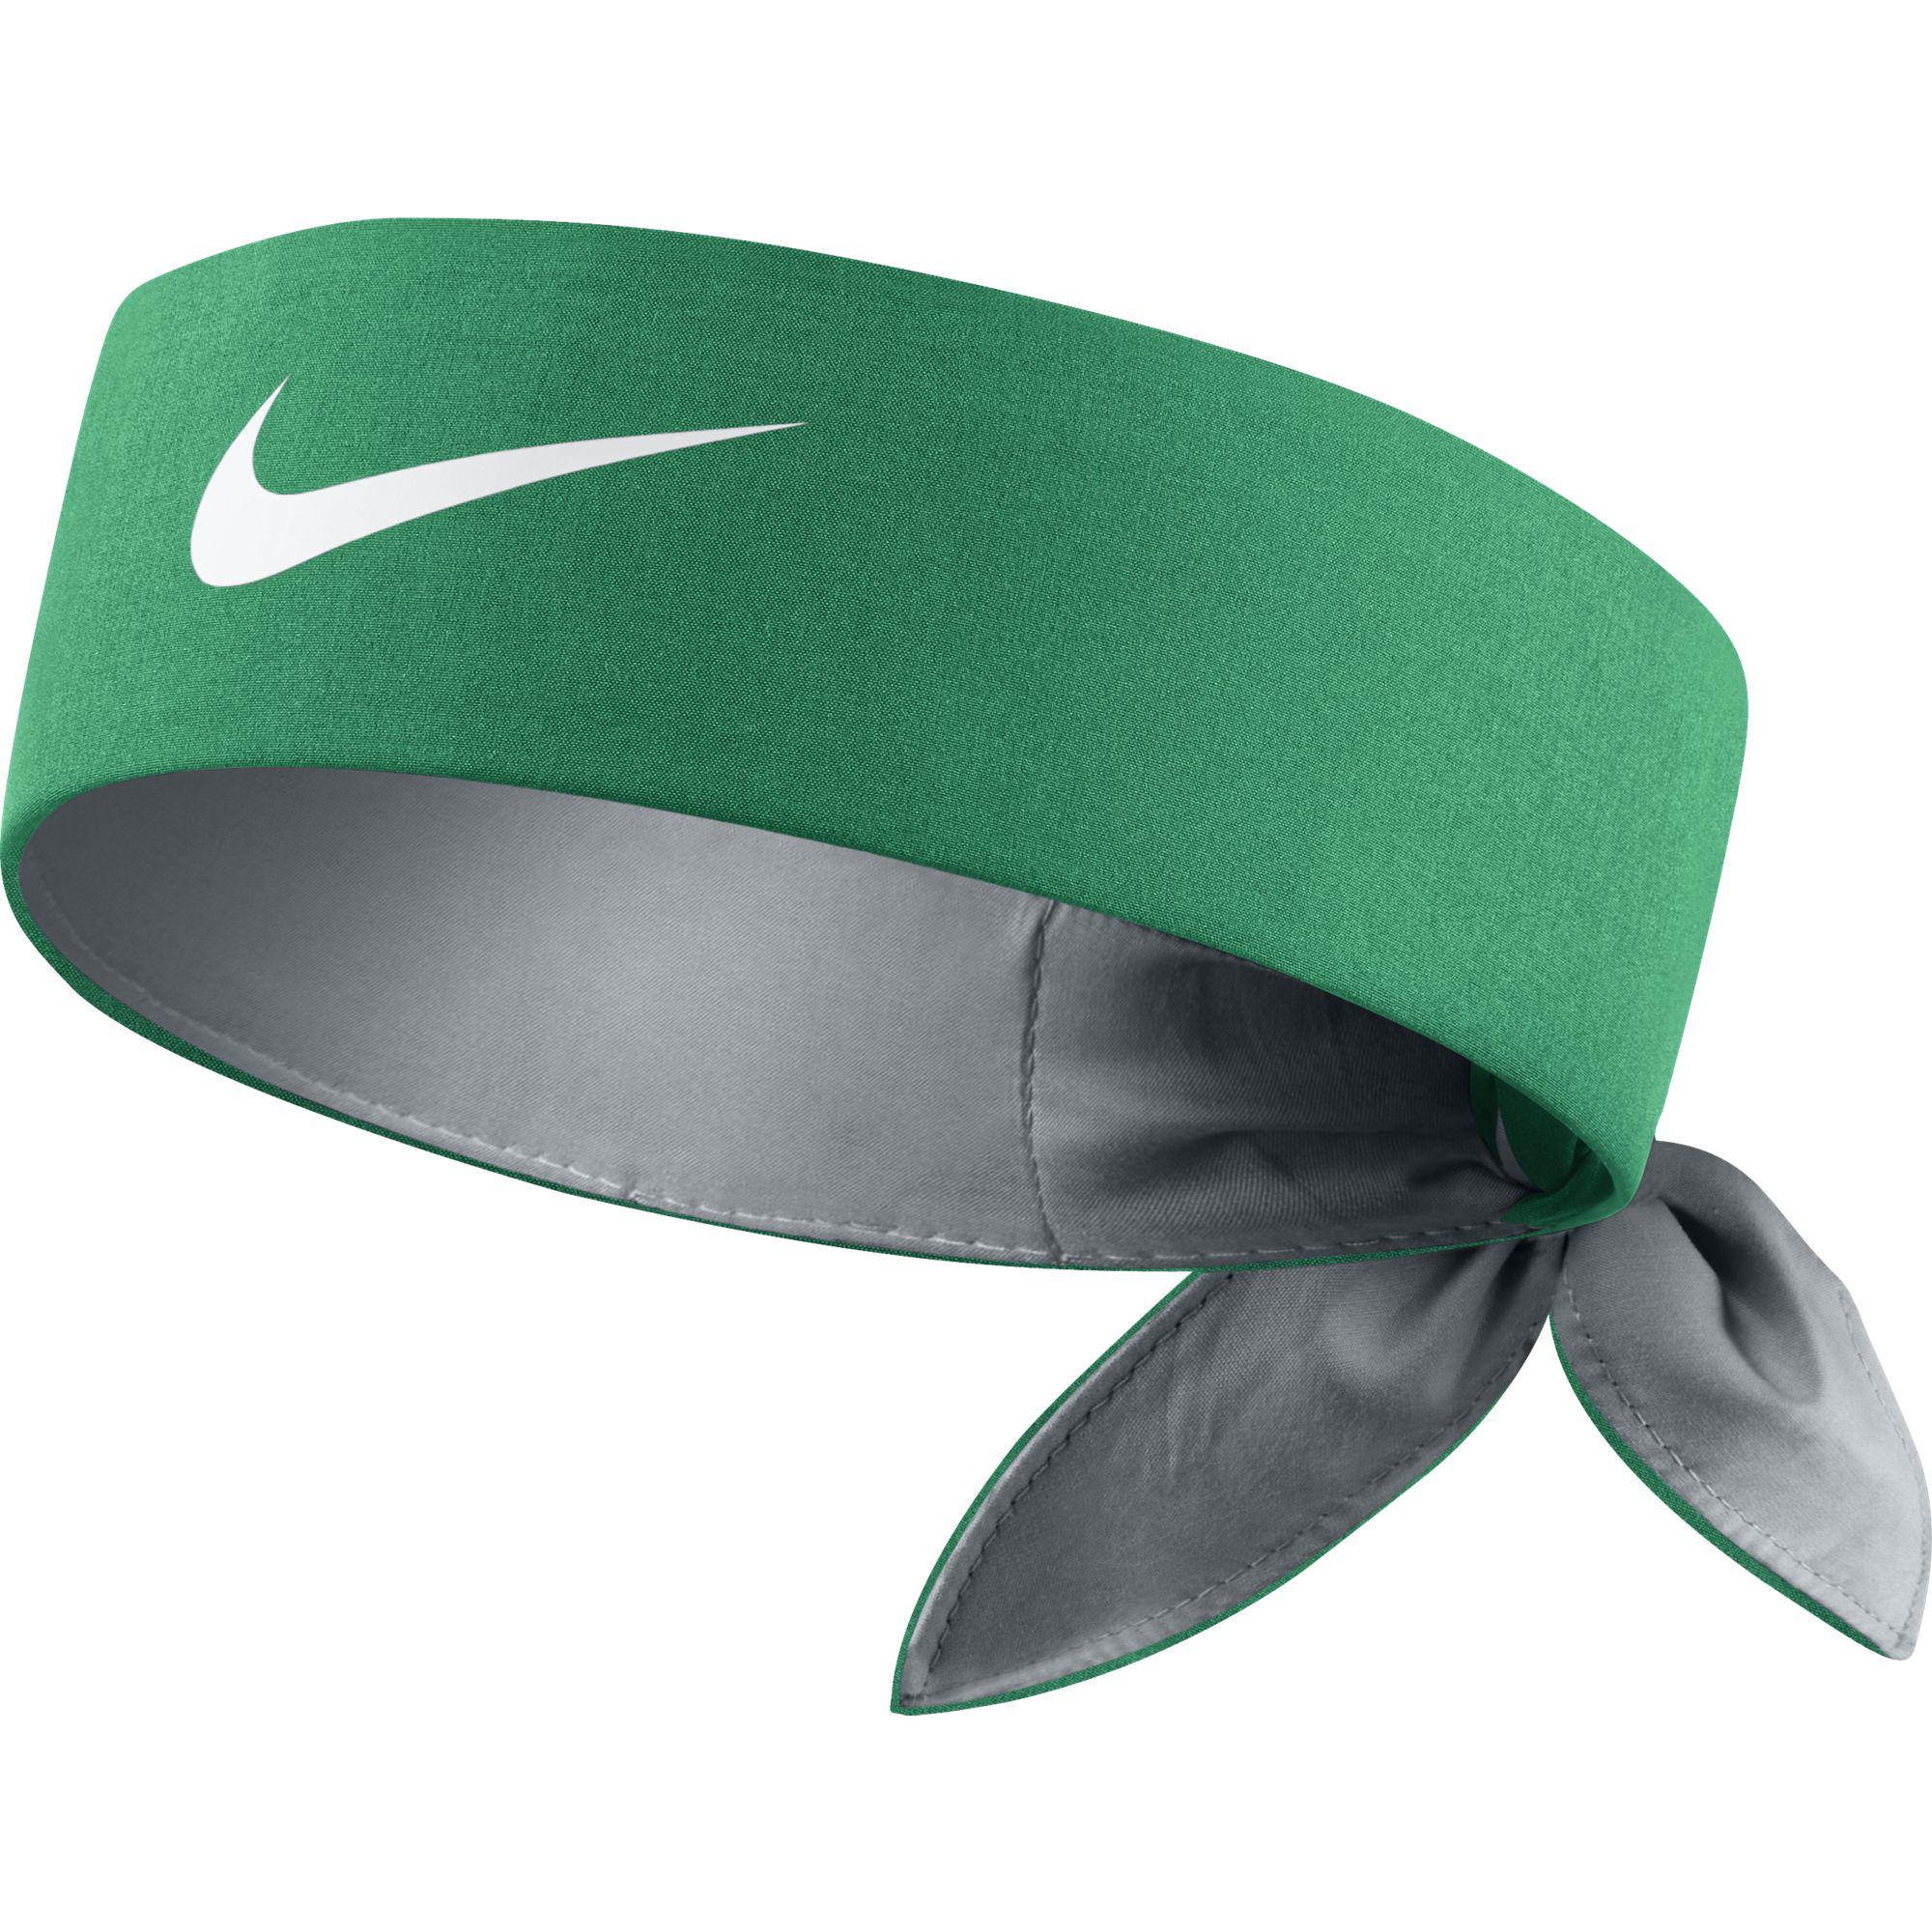 Nike Tennis Headband / Bandana - Spring Leaf Green - Tennisnuts.com